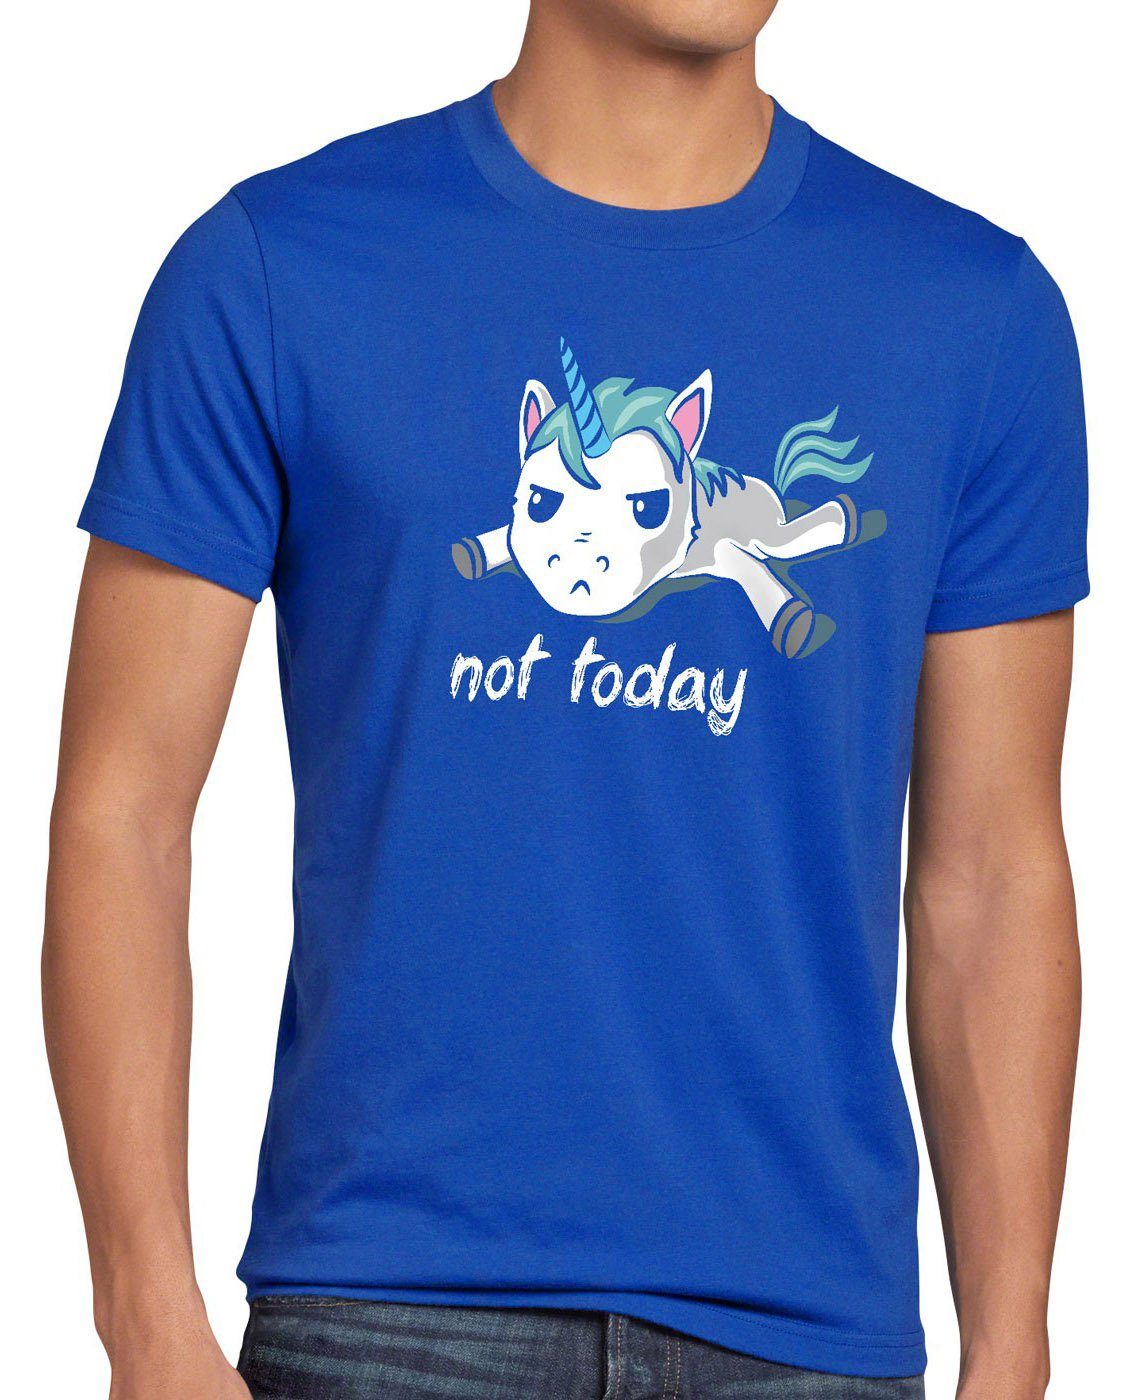 style3 Print-Shirt Herren T-Shirt Not today Unicorn Einhorn fun spruch nicht heute faul funshirt blau